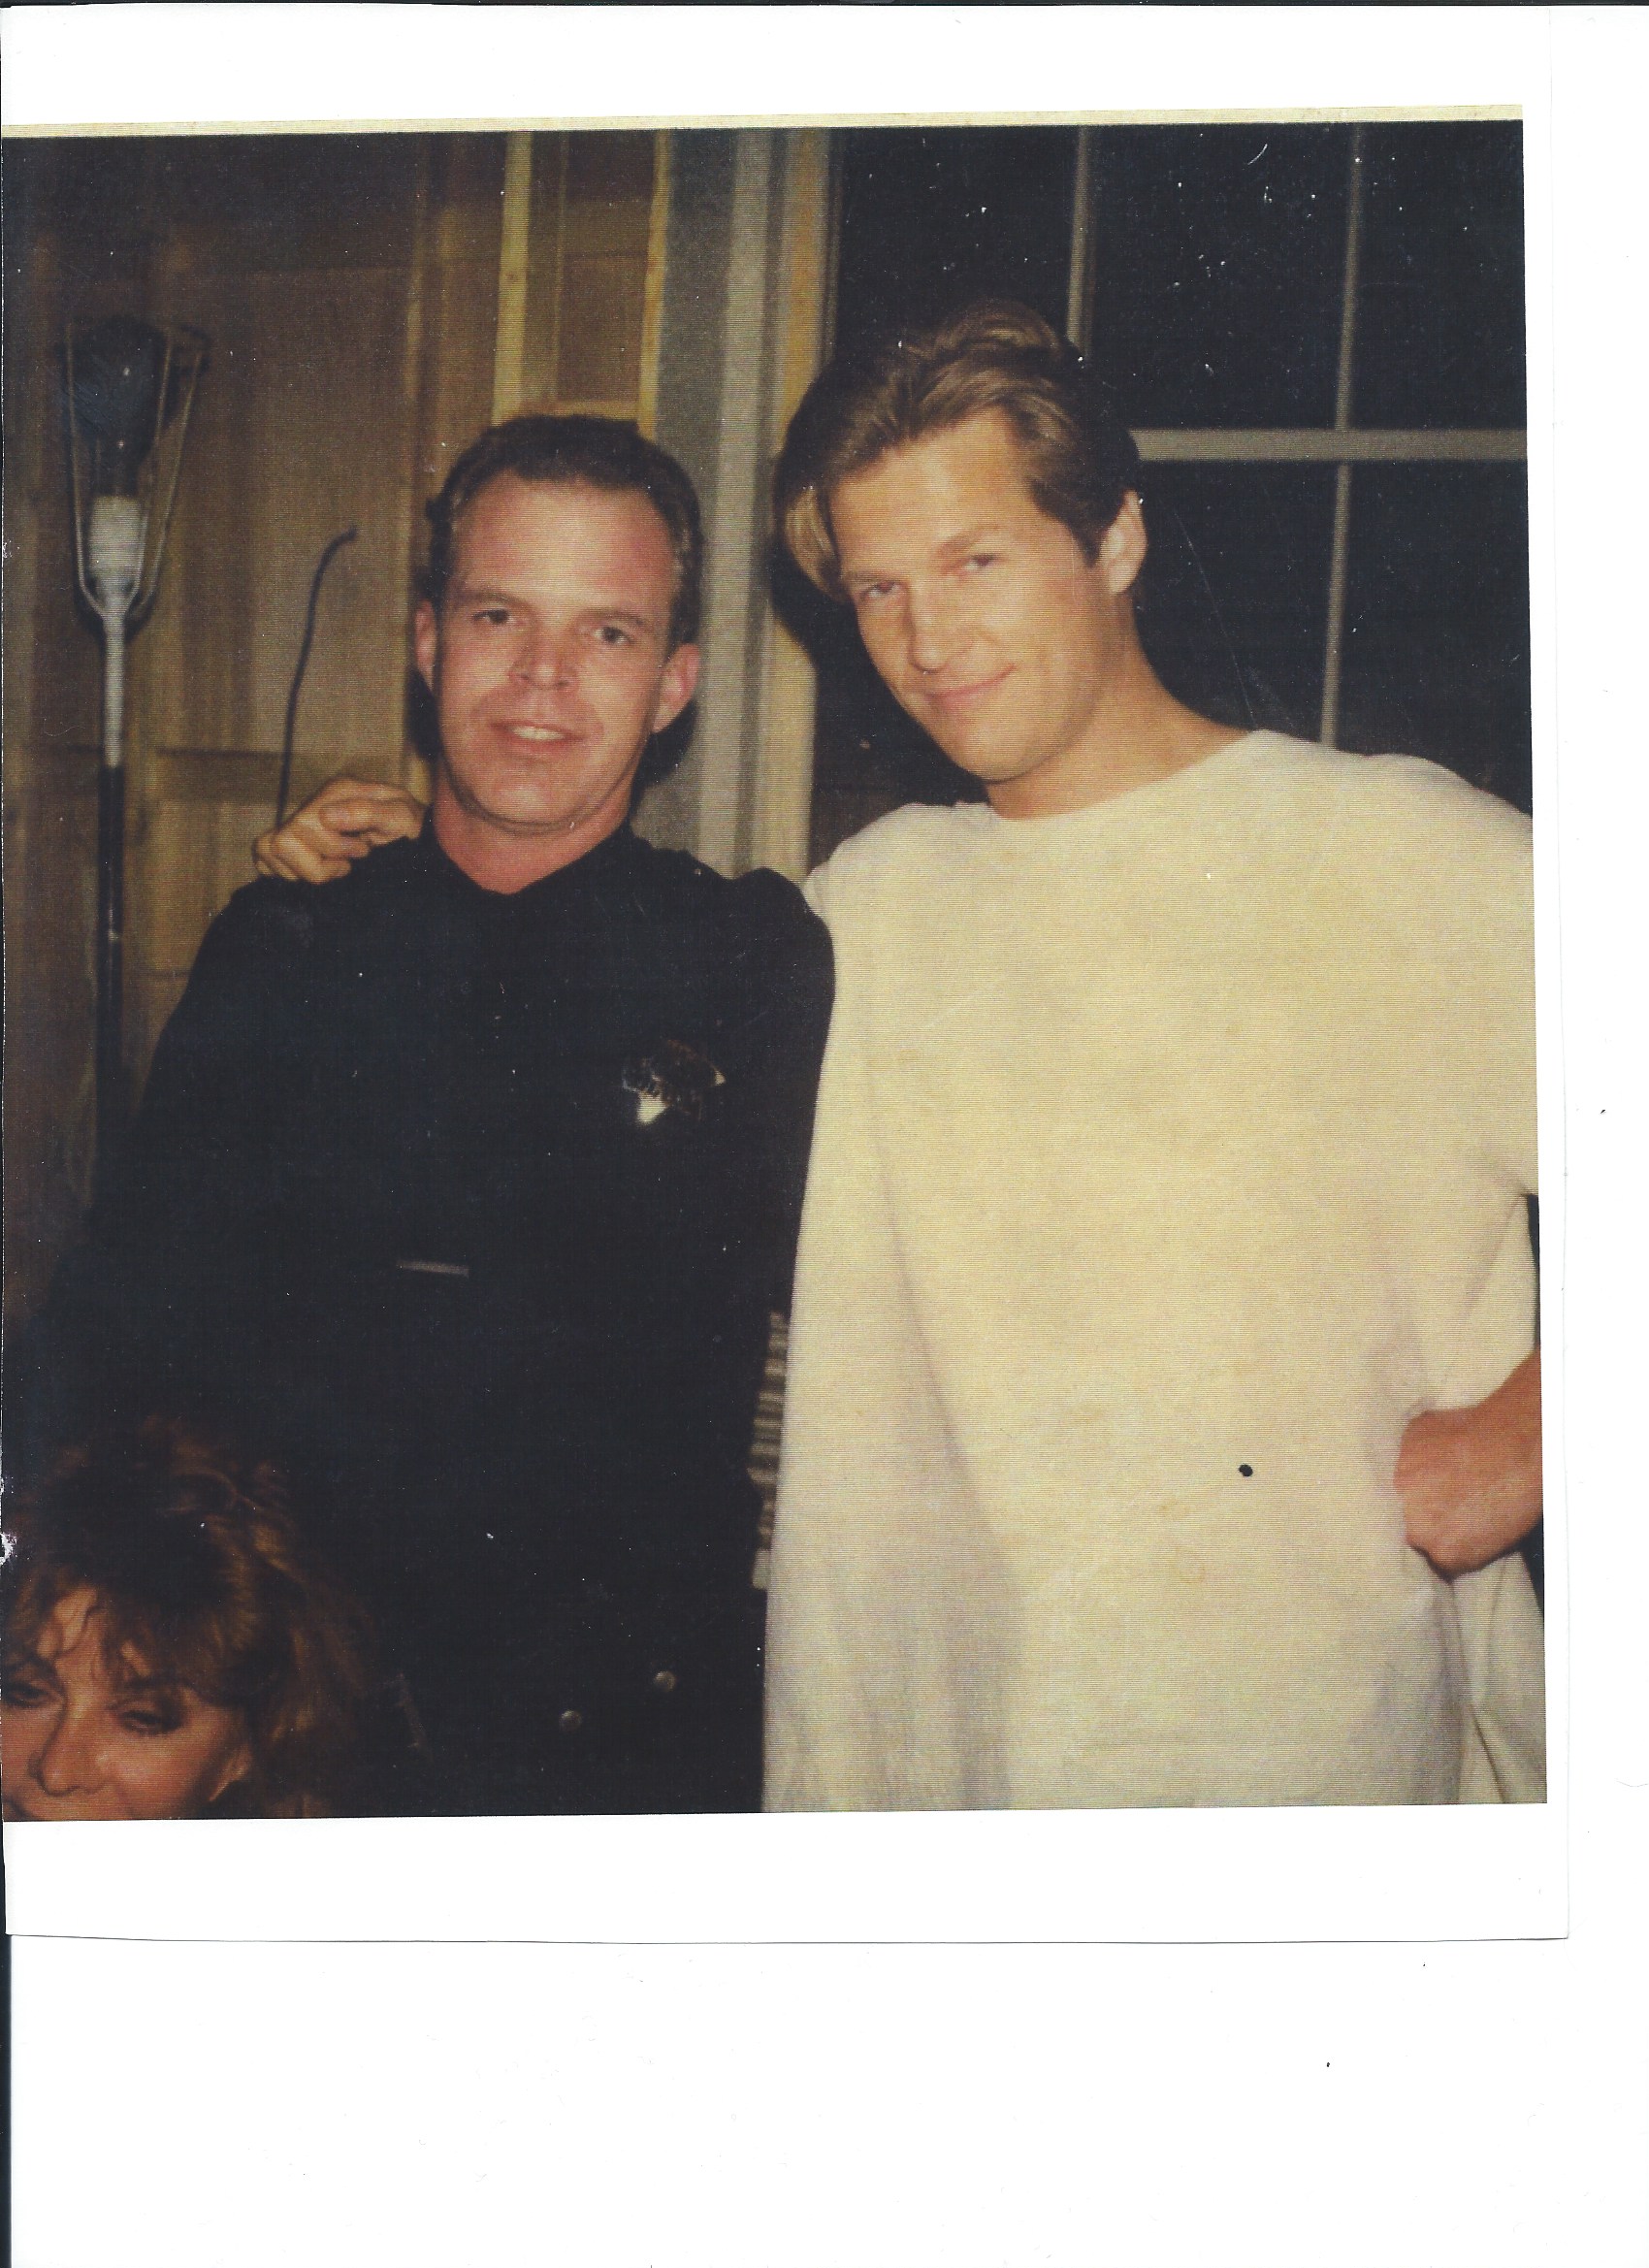 Richard Partlow and Jeff Bridges on set of 'Jagged Edge' (Circa 1985)